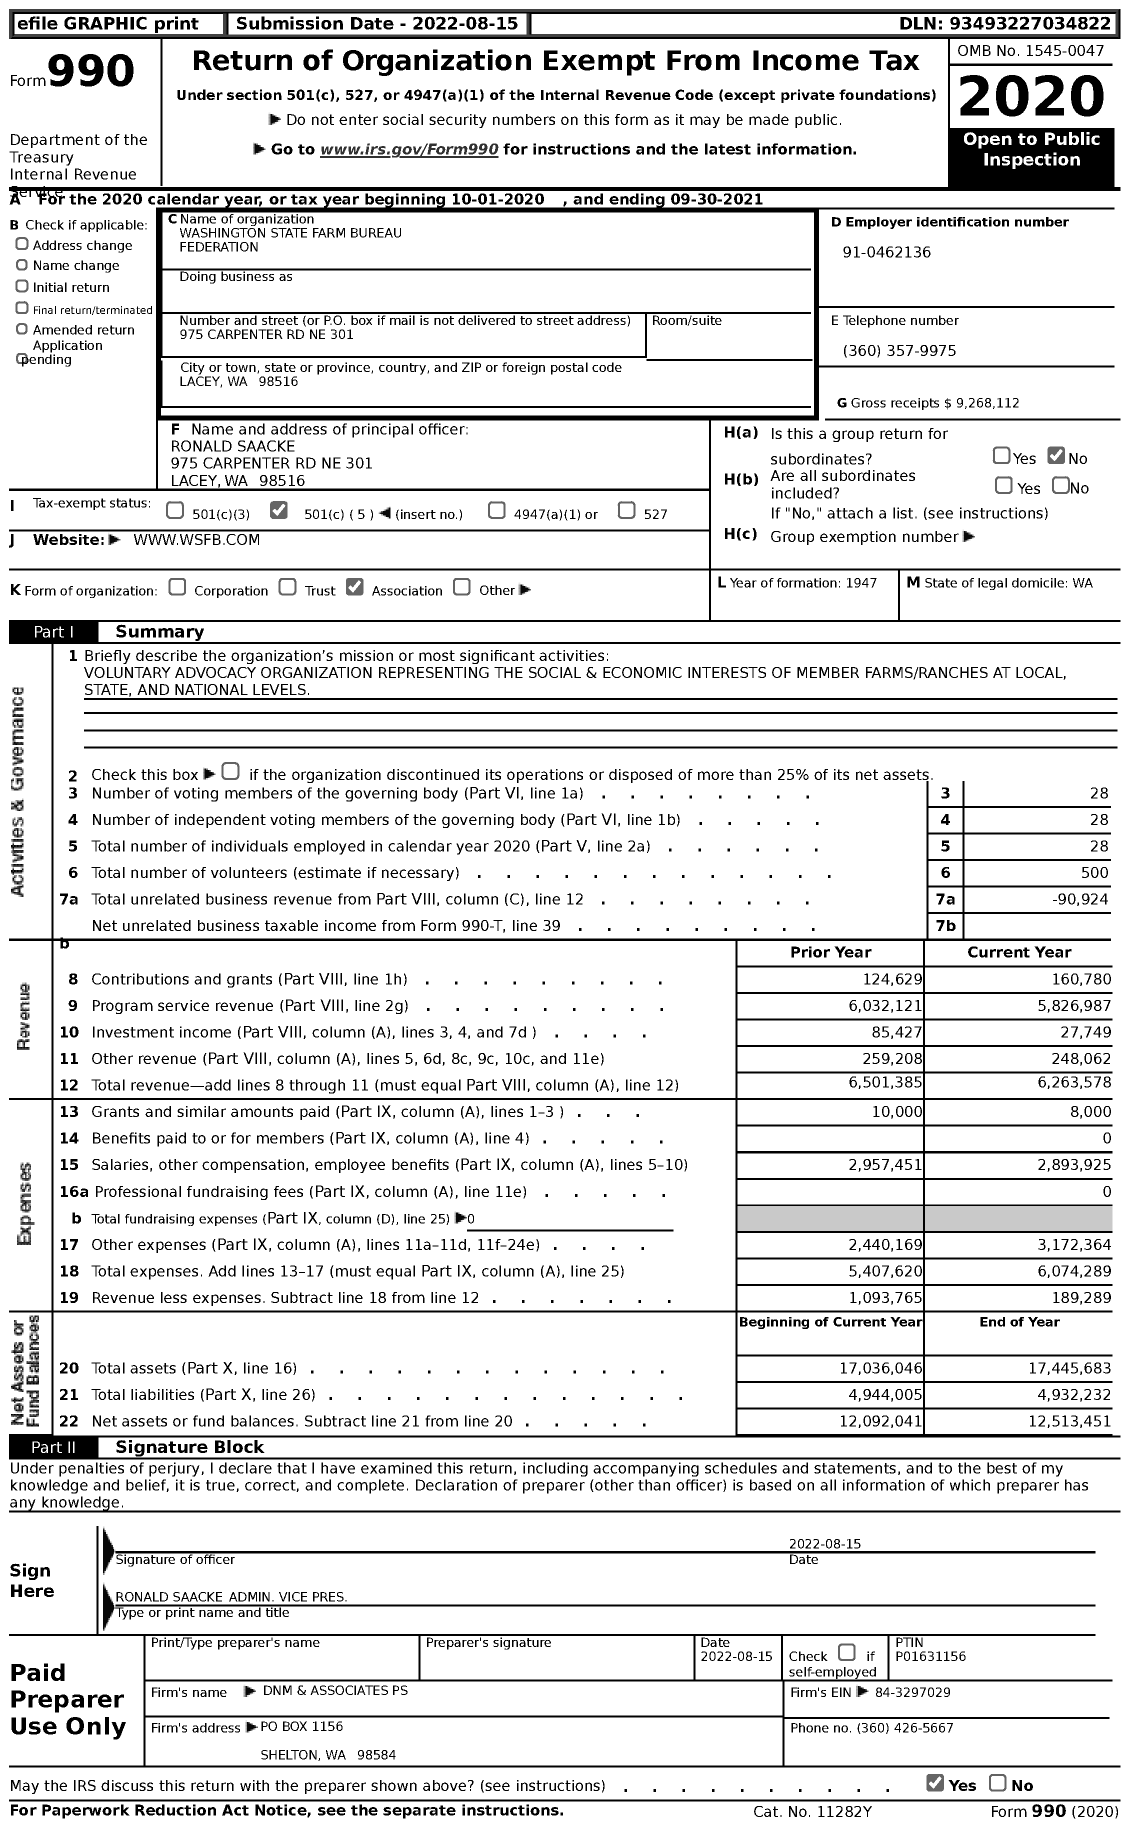 Image of first page of 2020 Form 990 for Washington Farm Bureau (WFB)